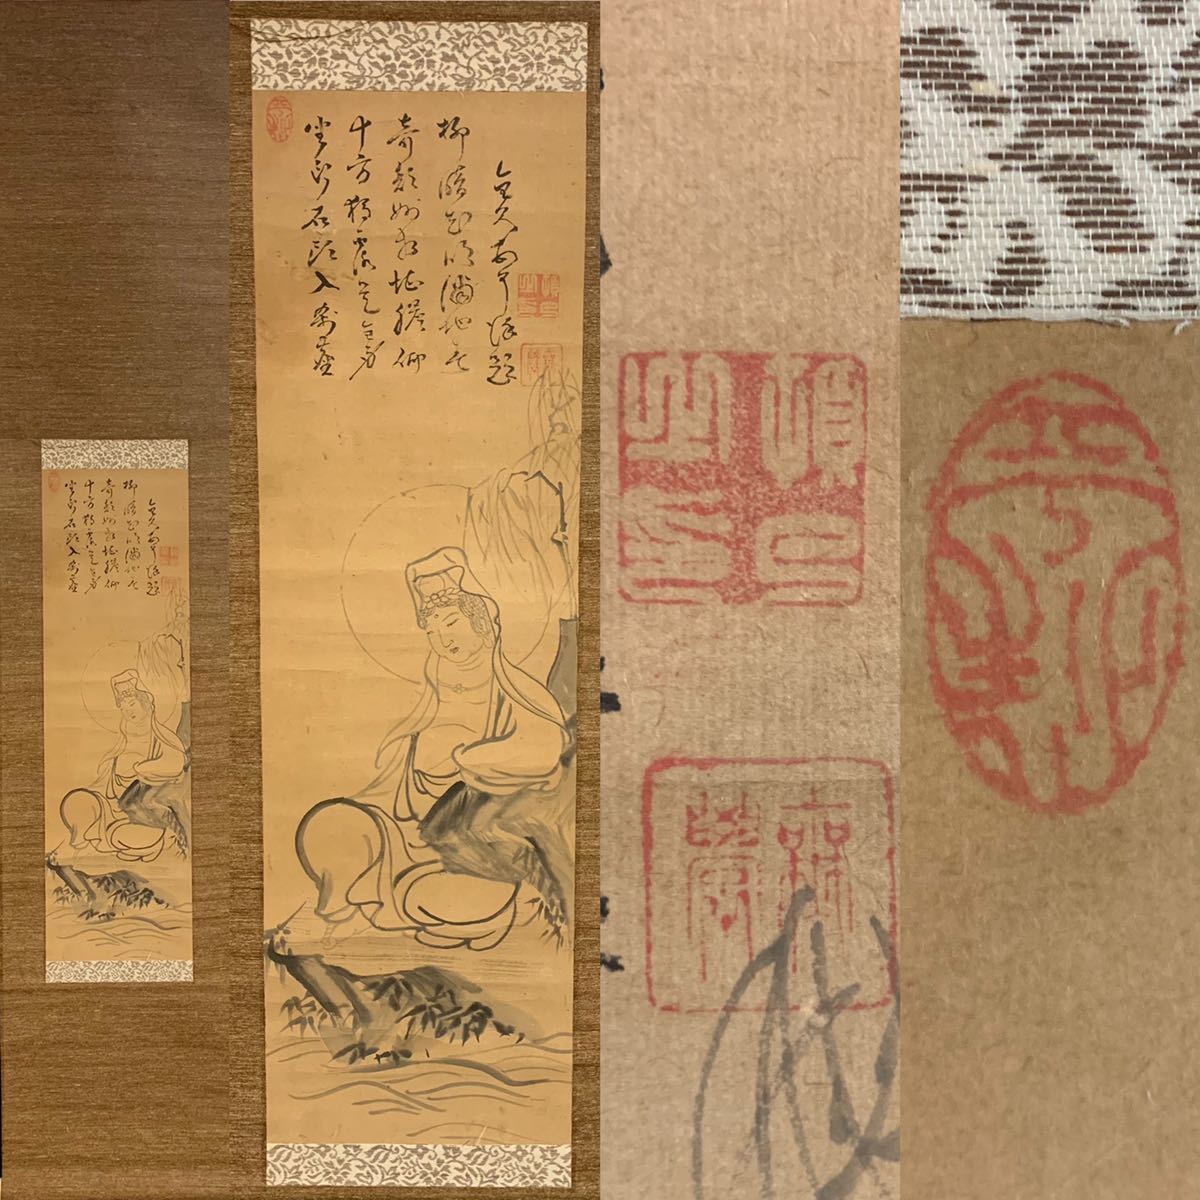 [Copiar] Hongo 06) Avalokitesvara bajo los sauces del monje Mugaku Pergamino colgante Arte budista Aprox. 138x28cm, Cuadro, pintura japonesa, persona, Bodhisattva